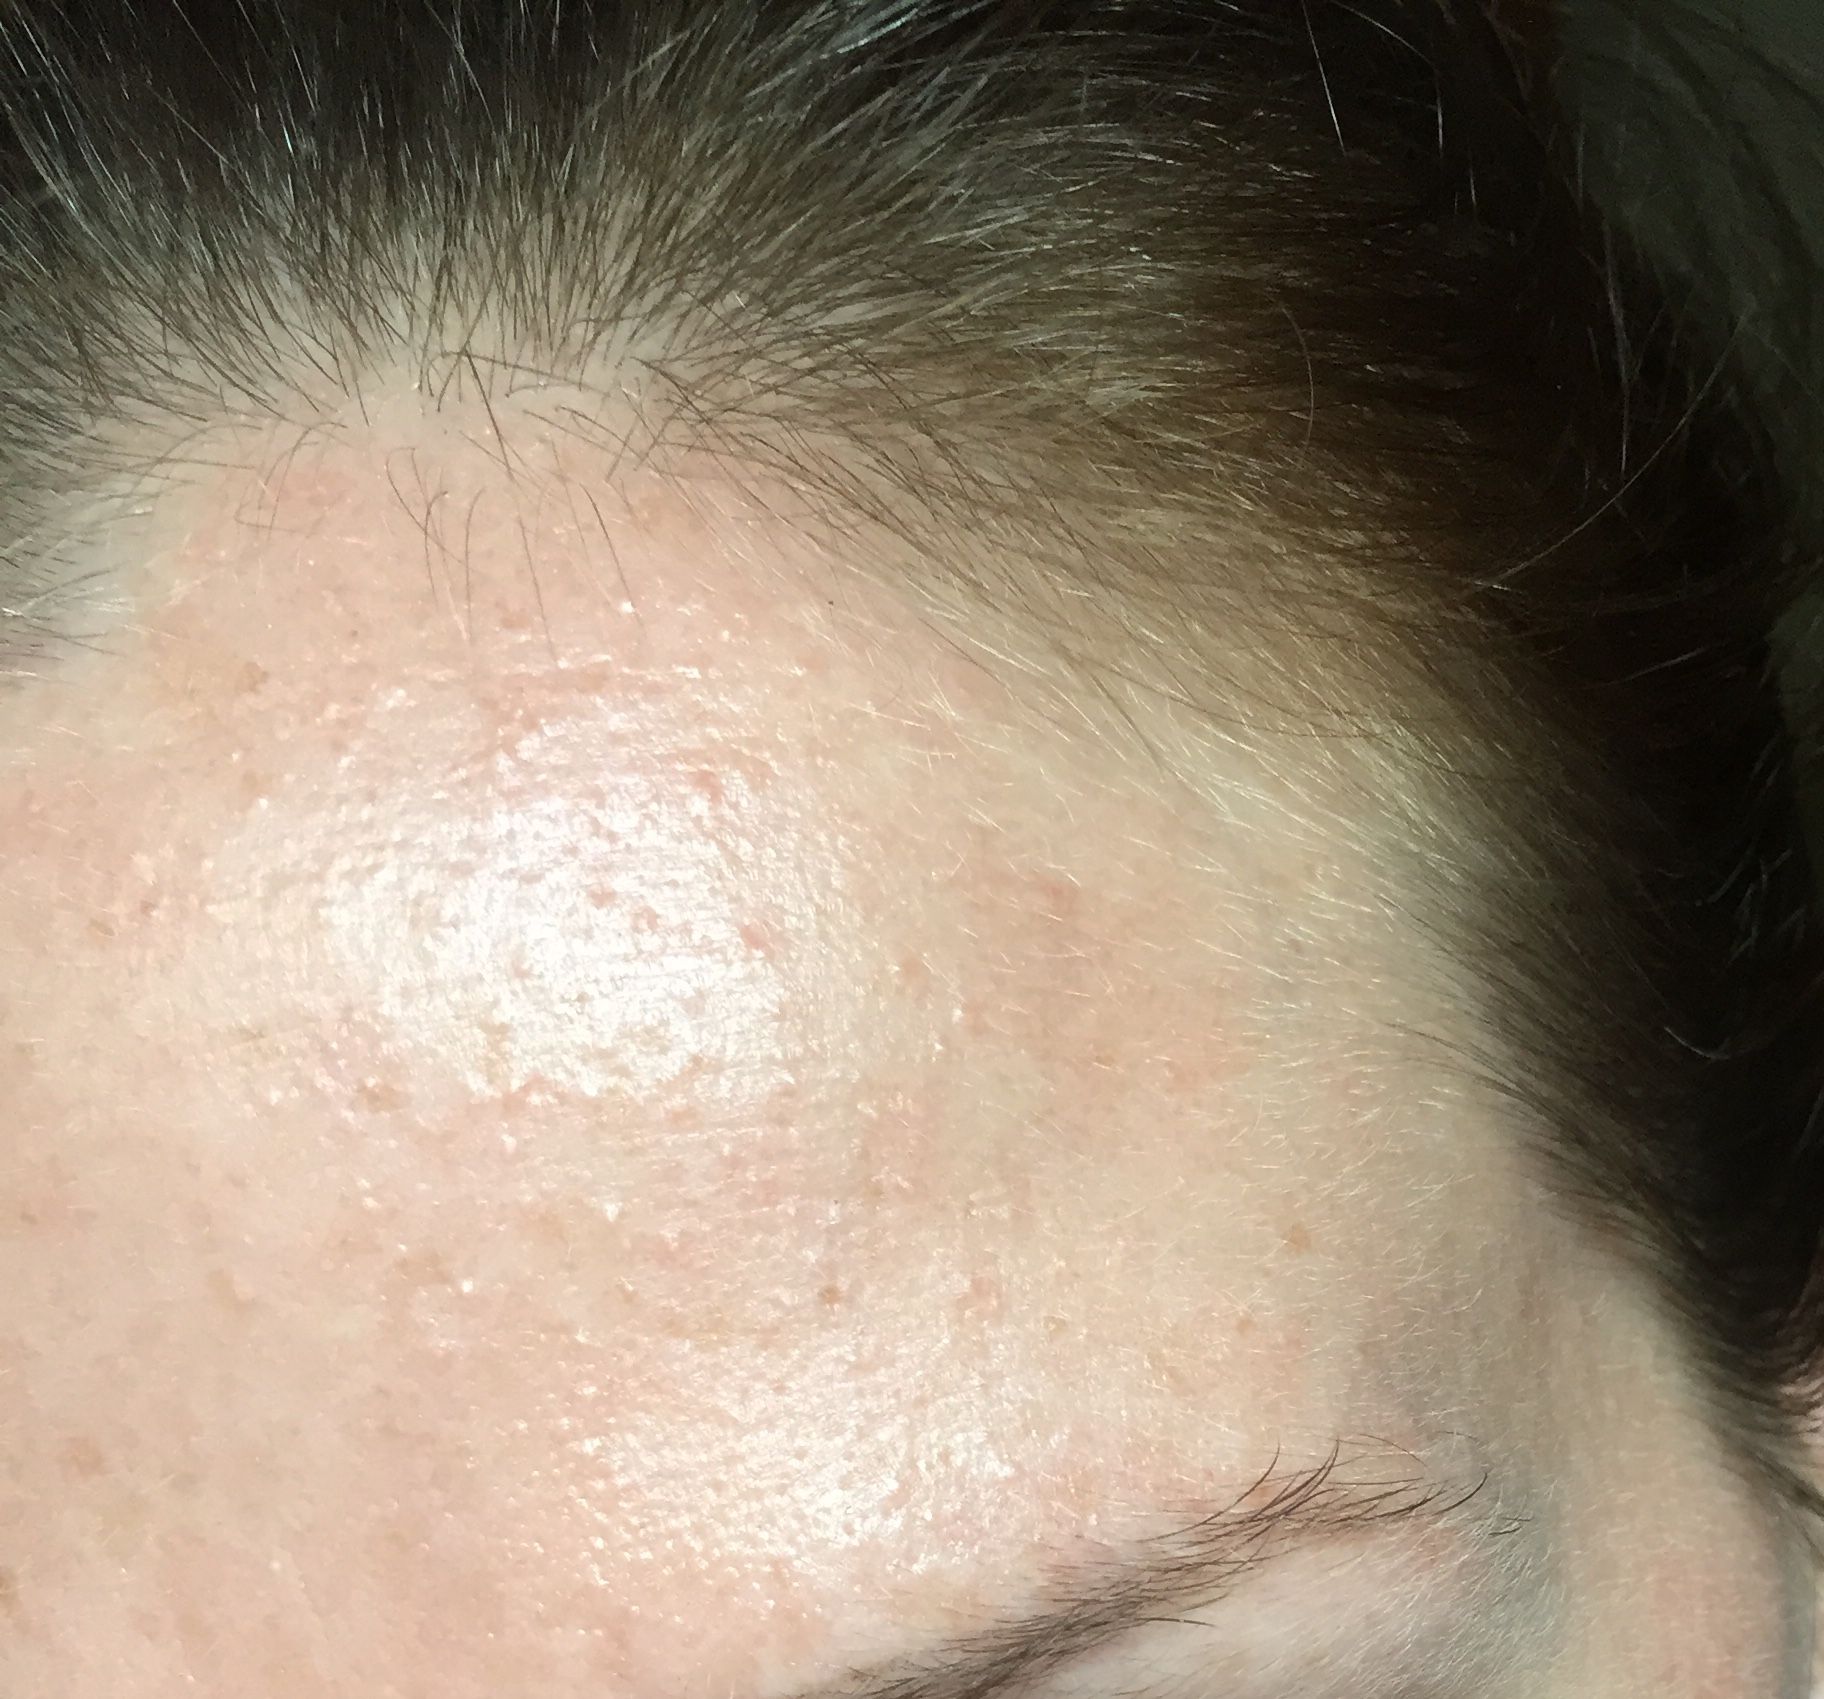 Small rash like bumps all over face - Beauty Insider Community